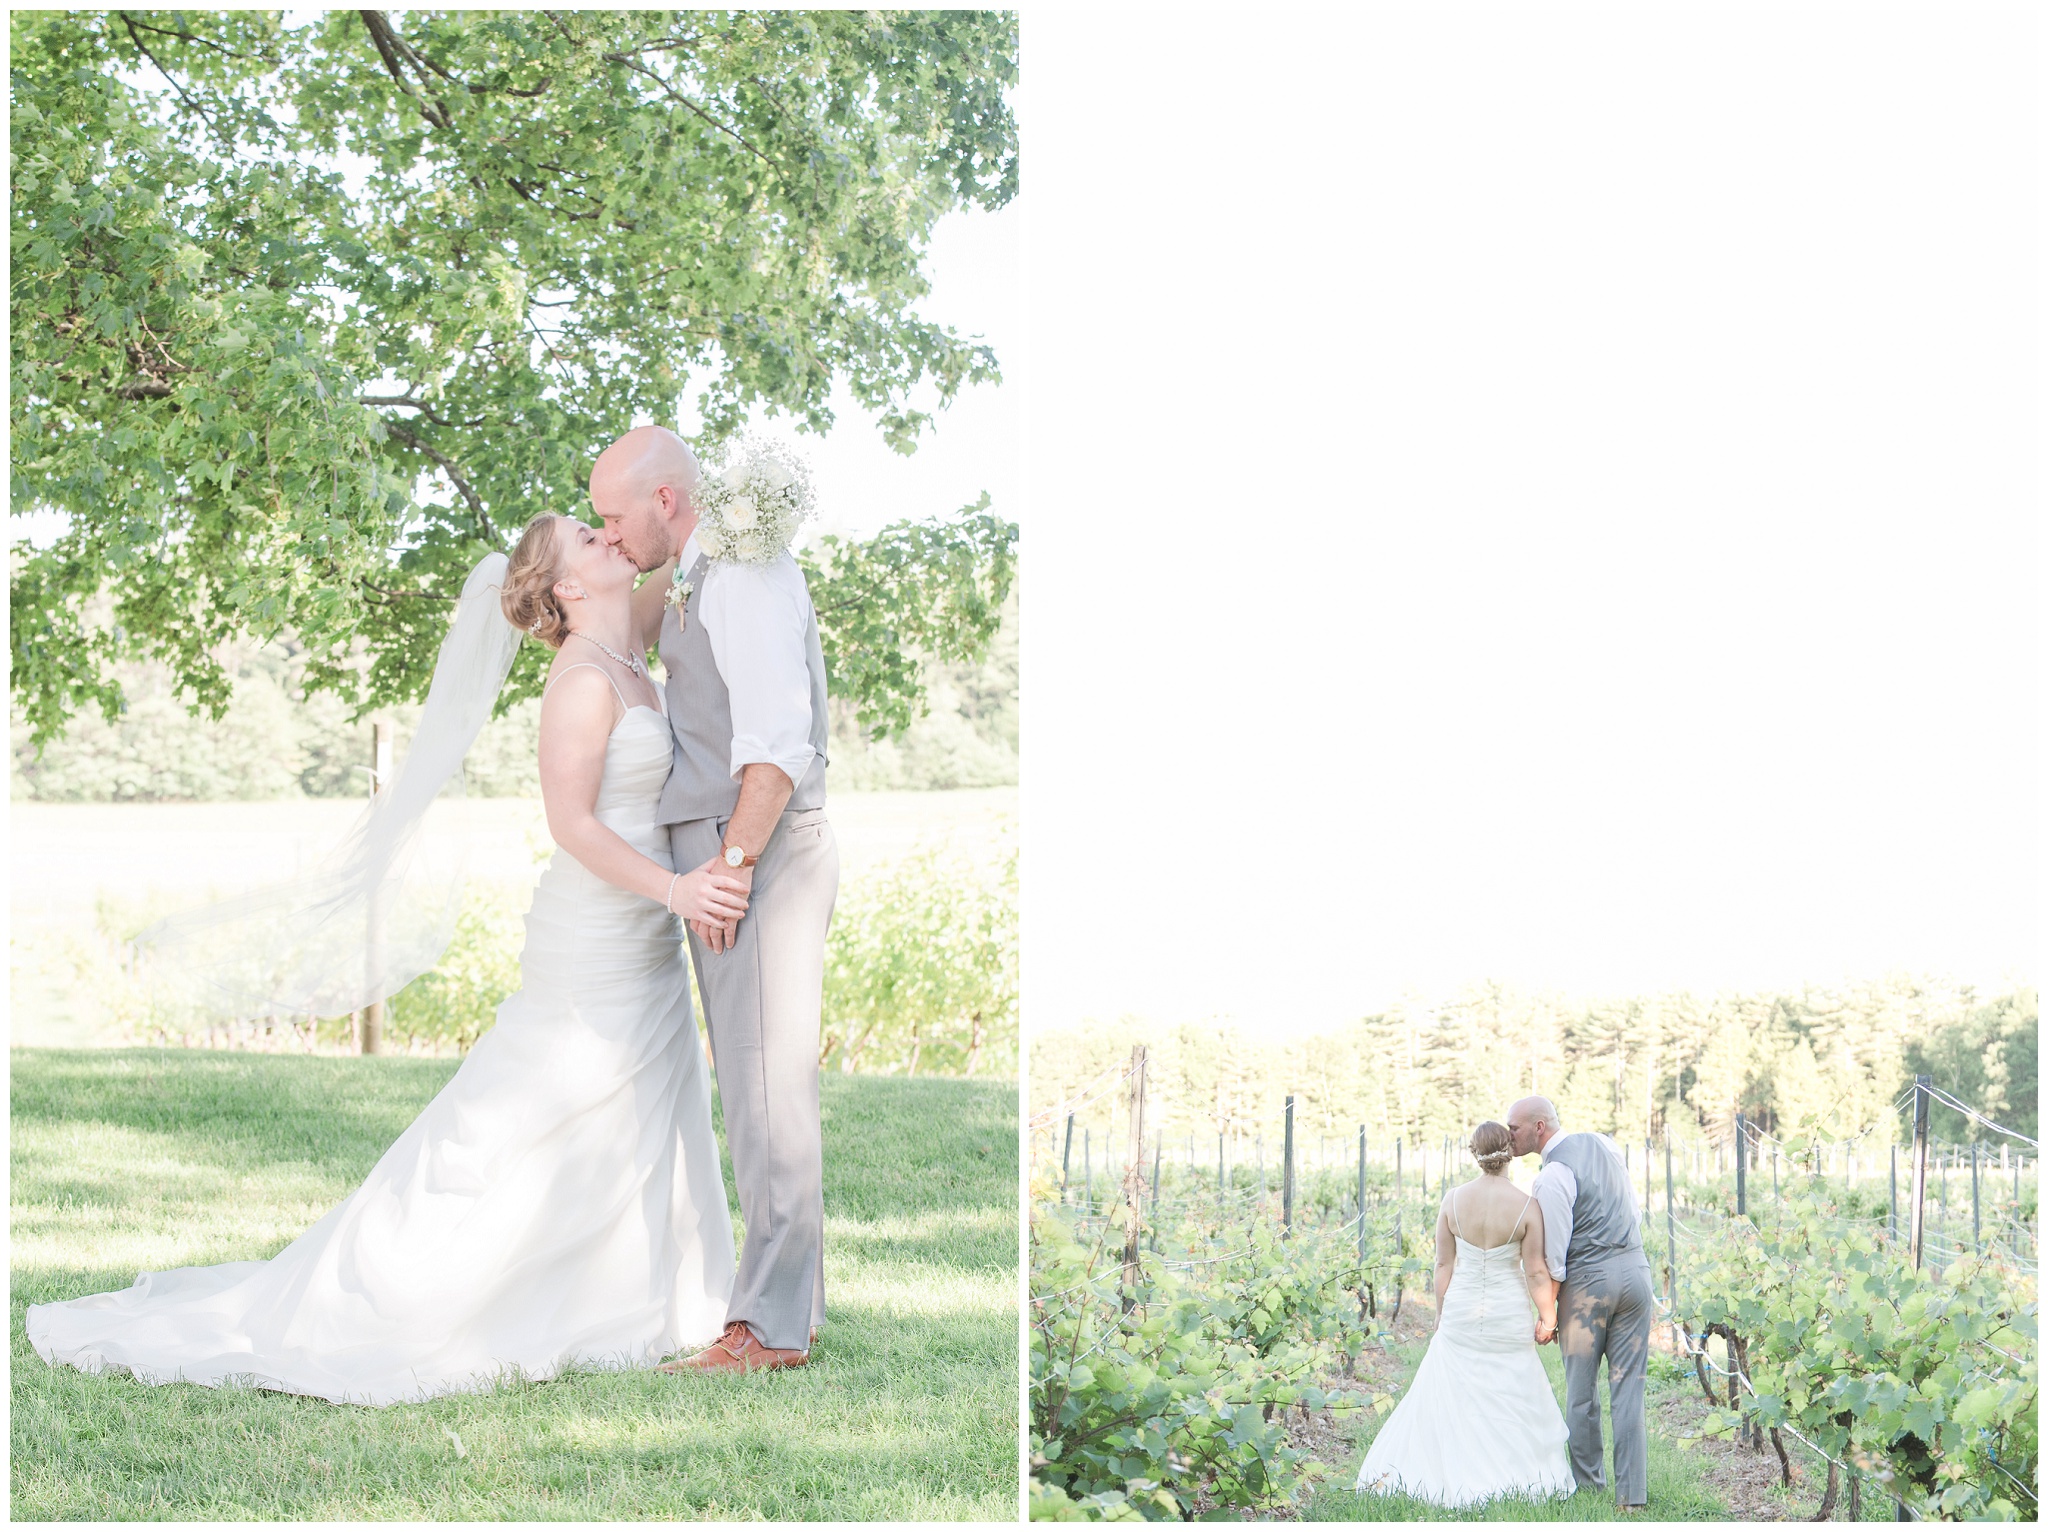 Seacoast NH Wedding Photographer | Prescott Park Engagement Session | Flag Hill Distillery Winery Wedding 